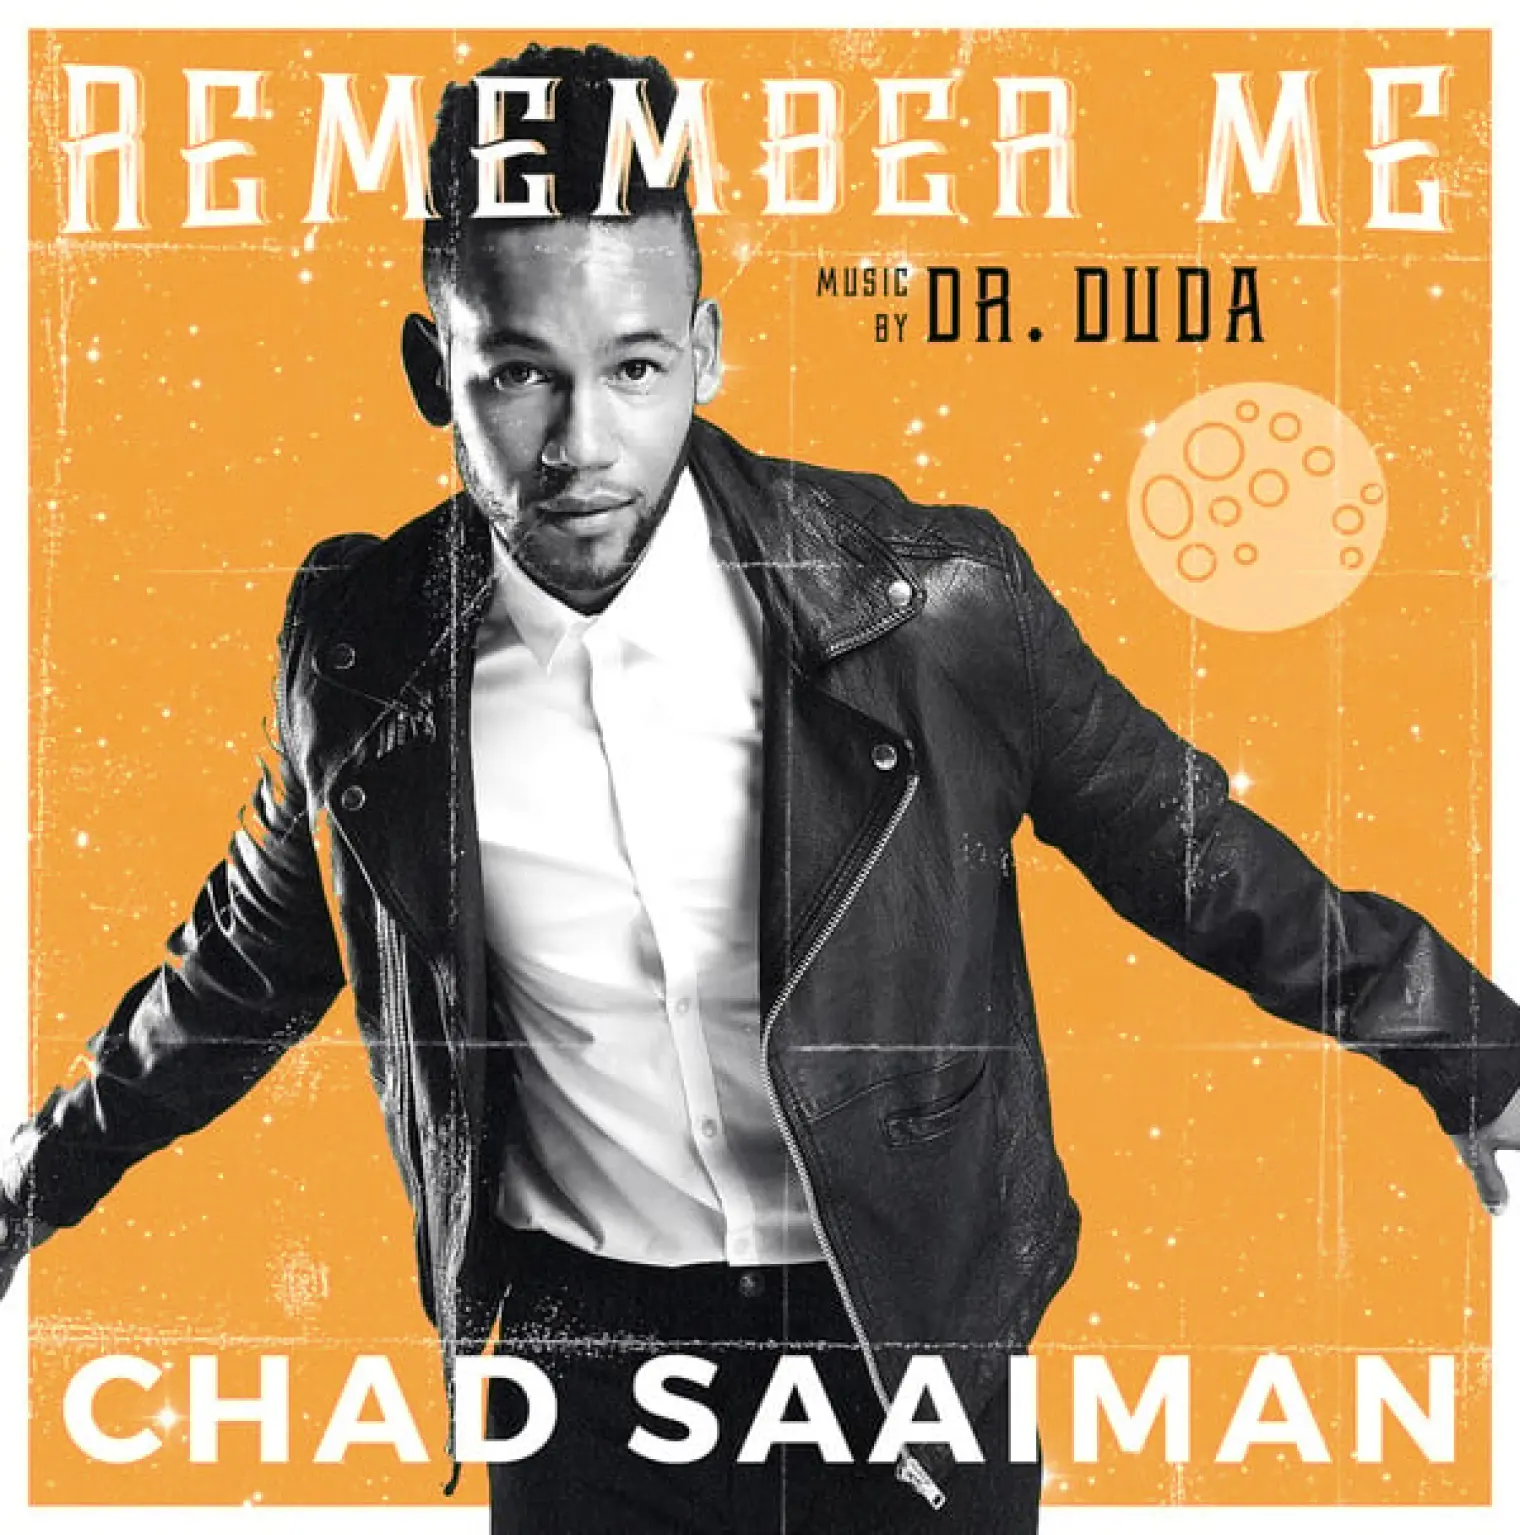 Remember Me -  Chad Saaiman 